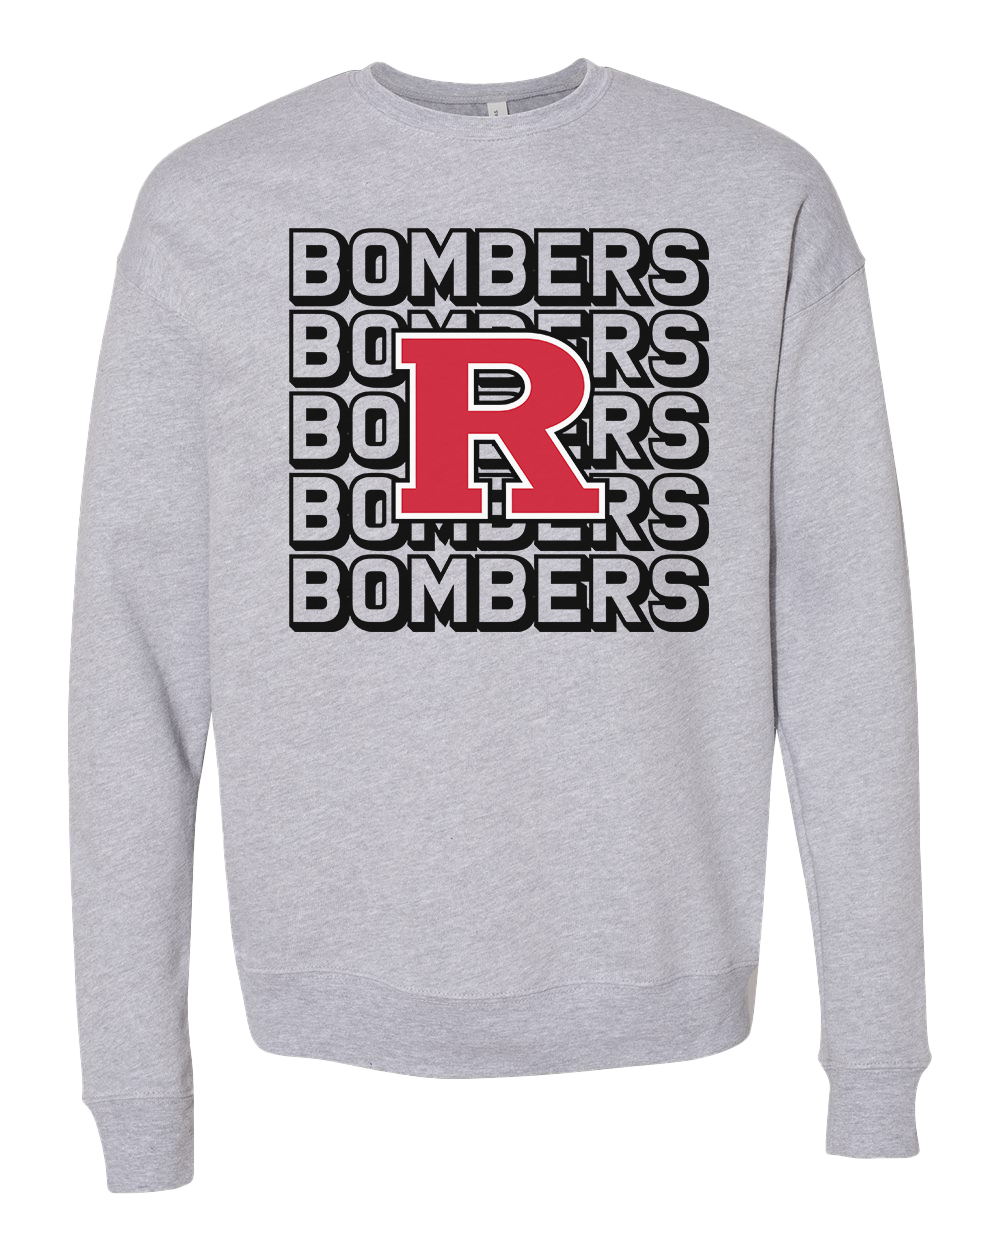 Rensselaer Central Bombers Repeat Crew Sweatshirt - Athletic Heather